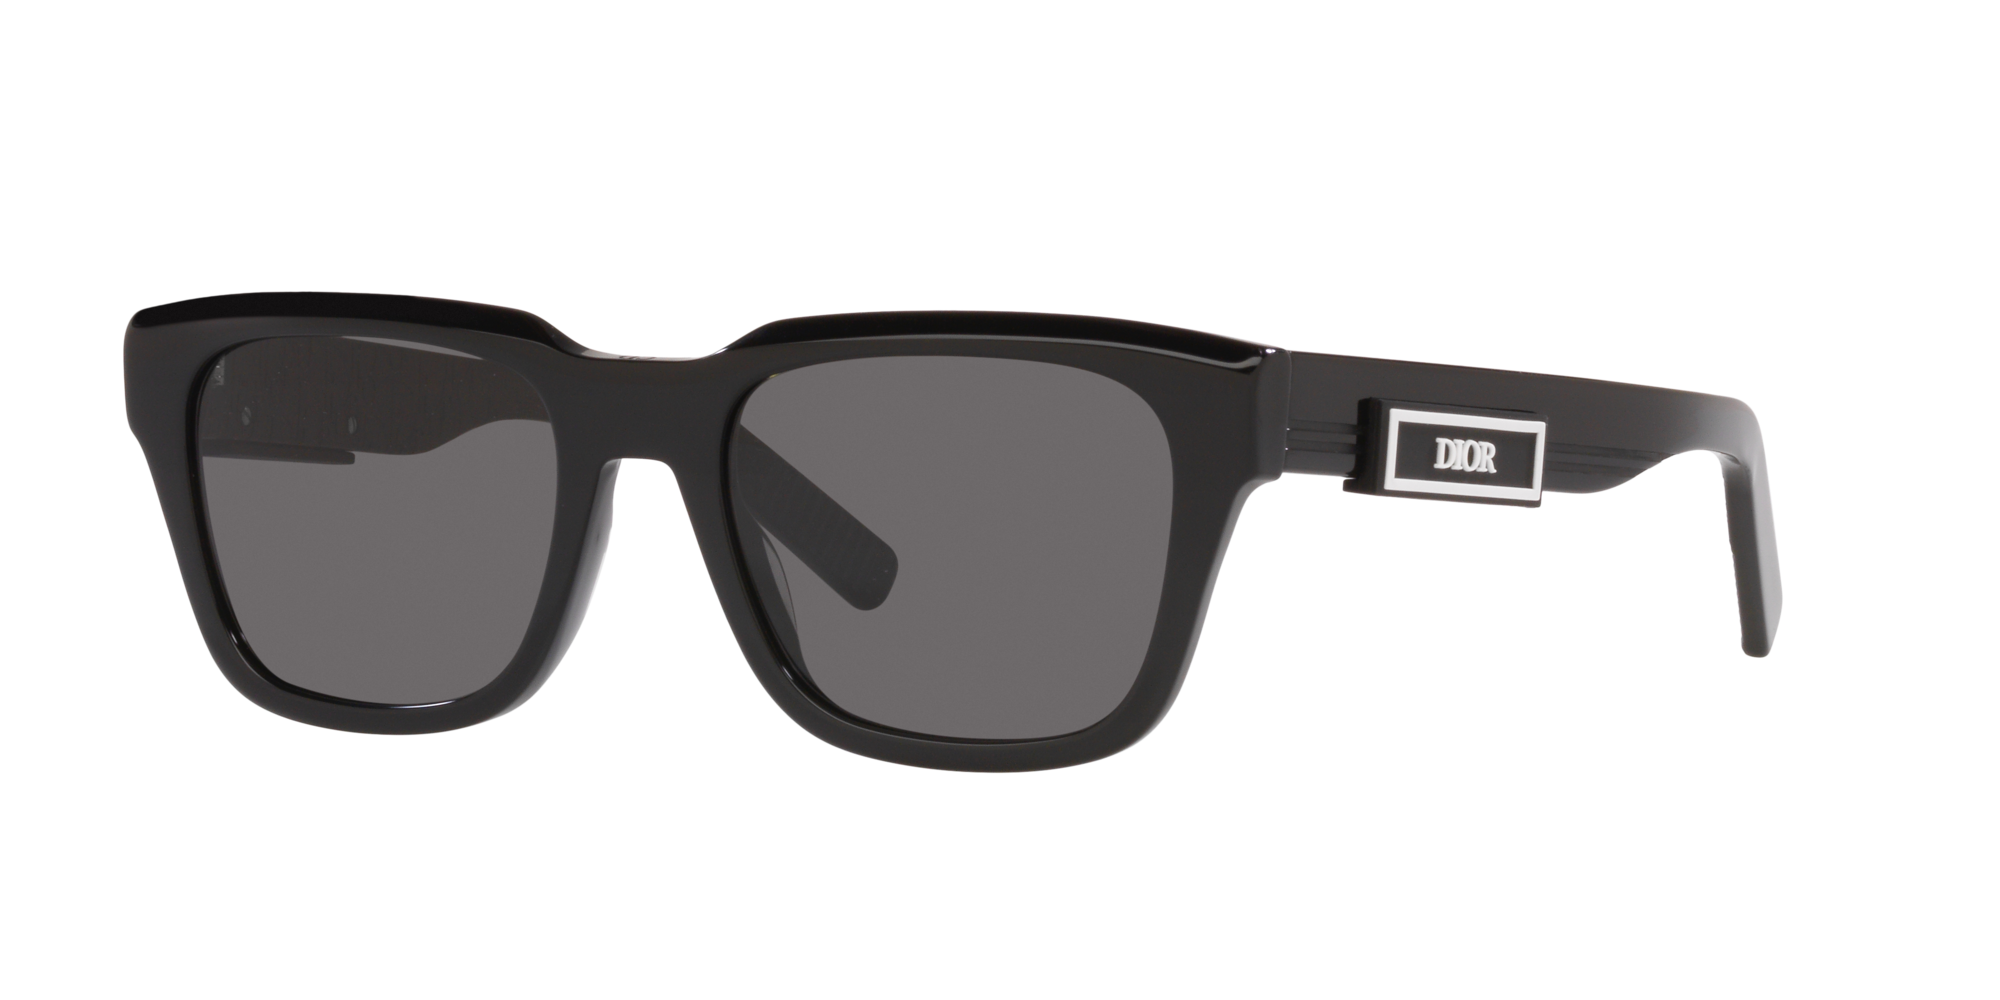 CD Link S1U CrystalTone Rectangular Sunglasses with Dior Oblique Motif   DIOR US